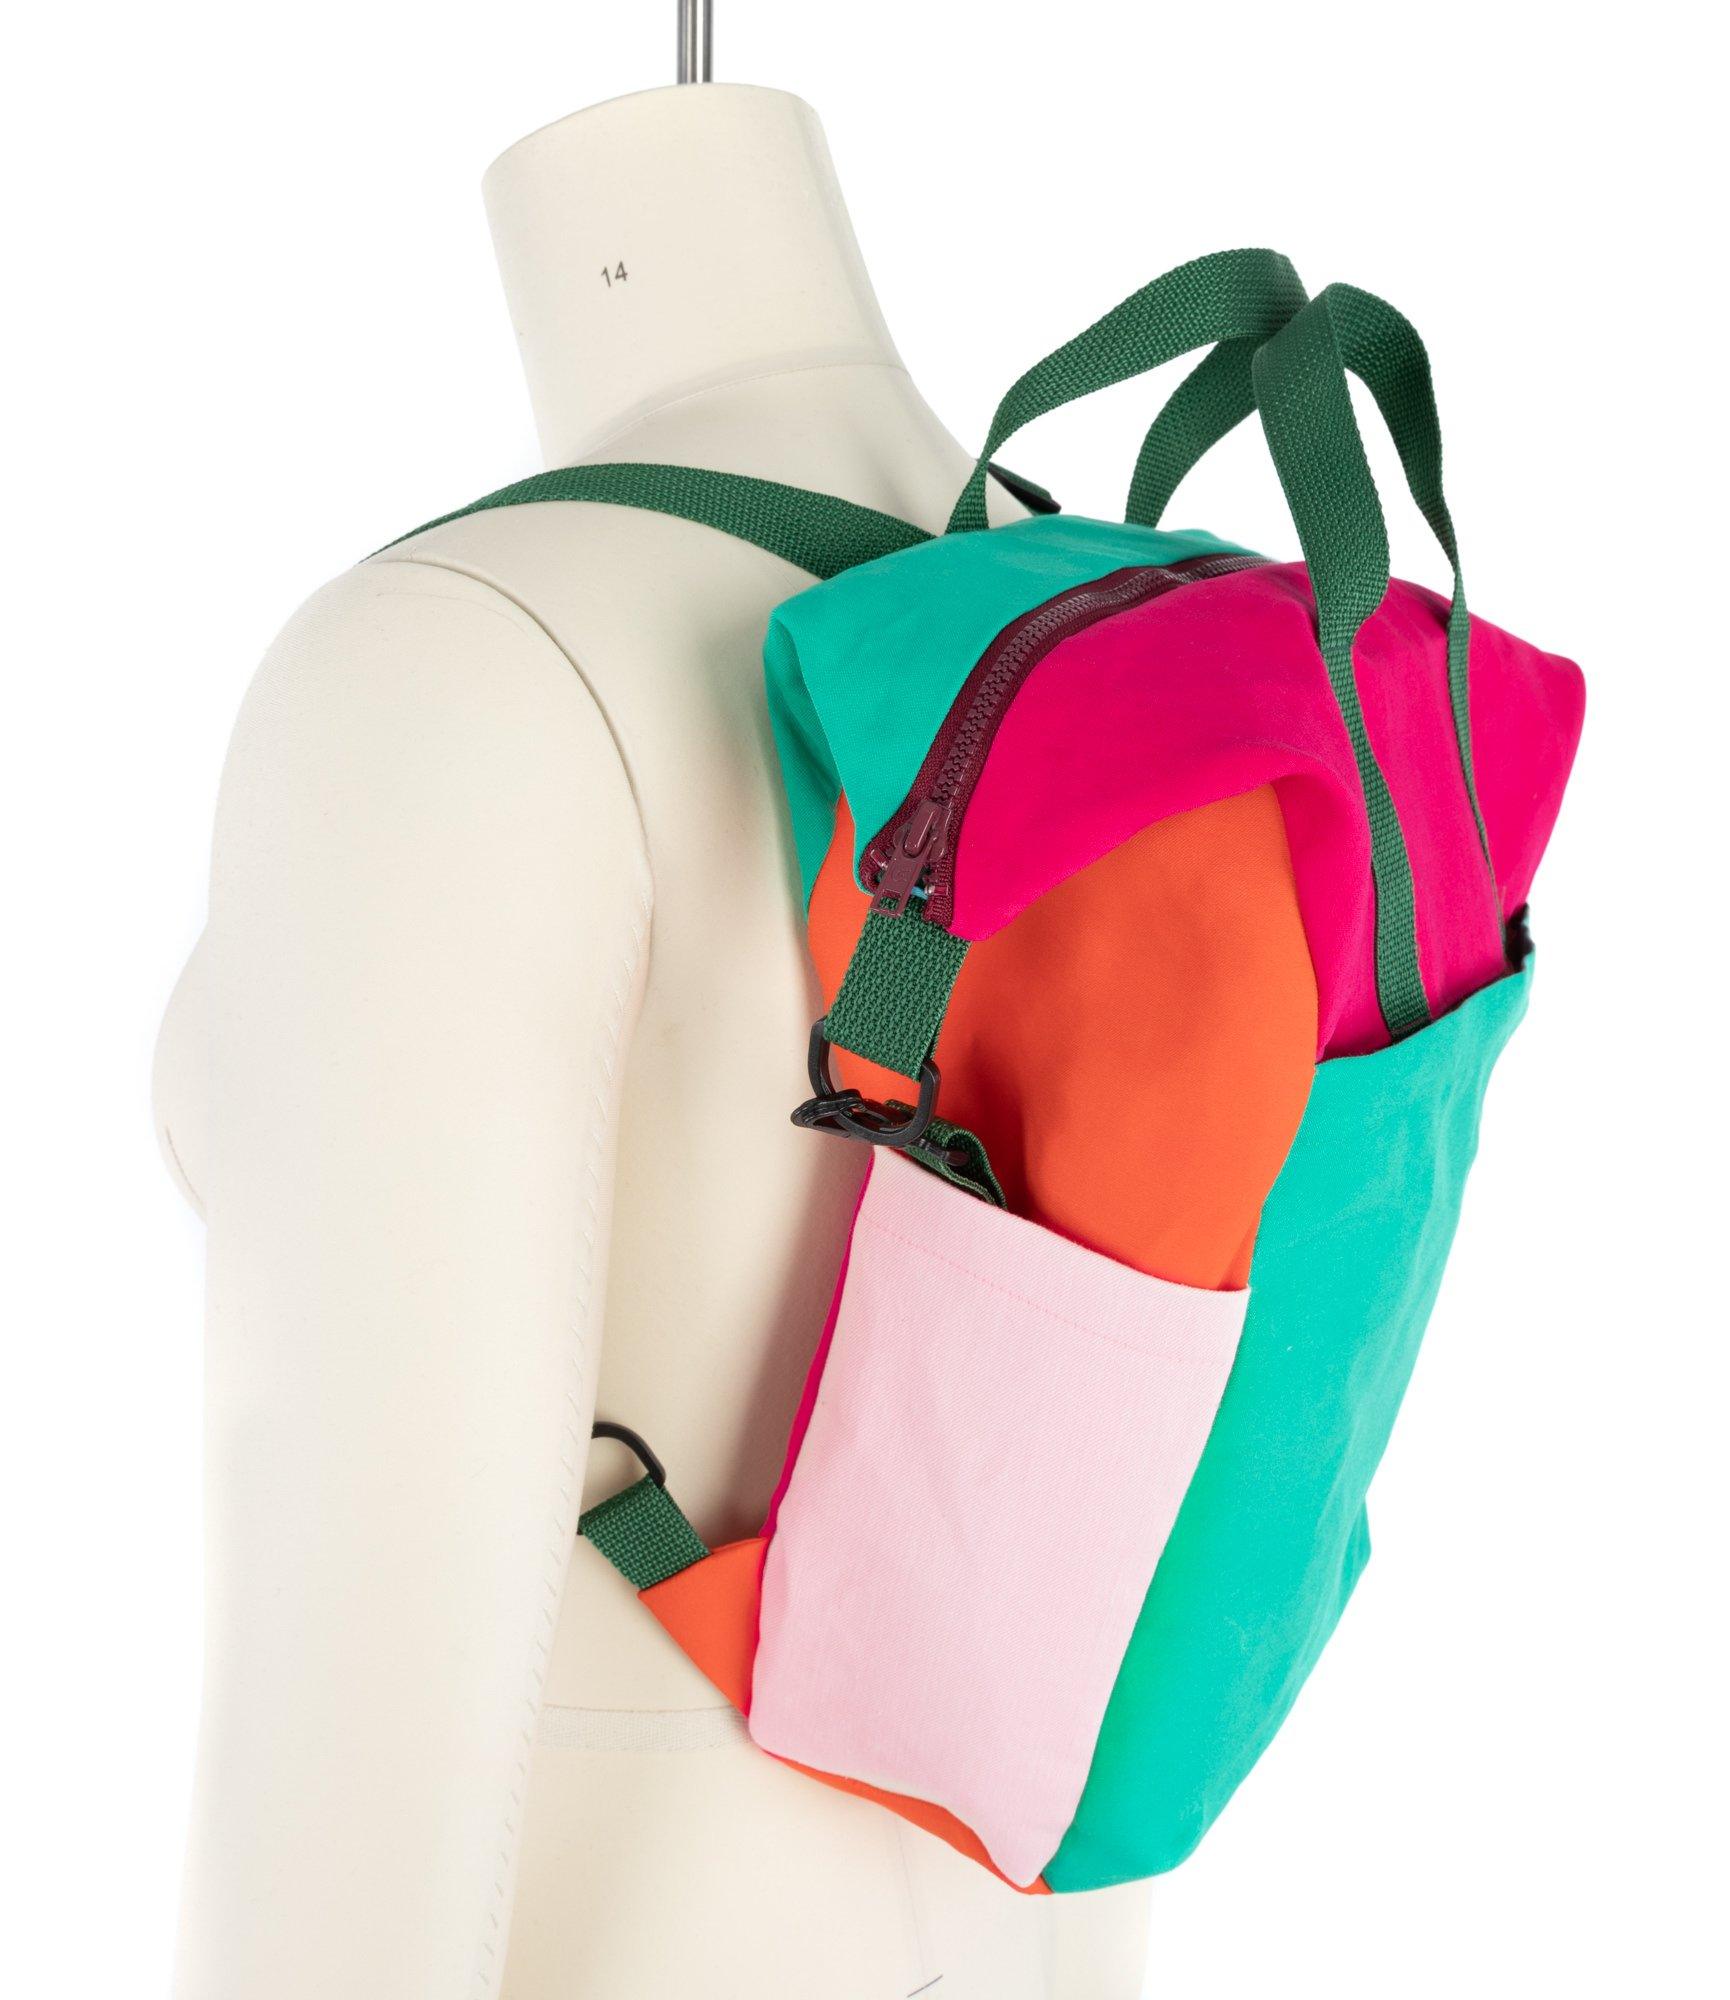 2021 // GALAXIE 5 - 3-in-1 Convertible backpack - Jalie